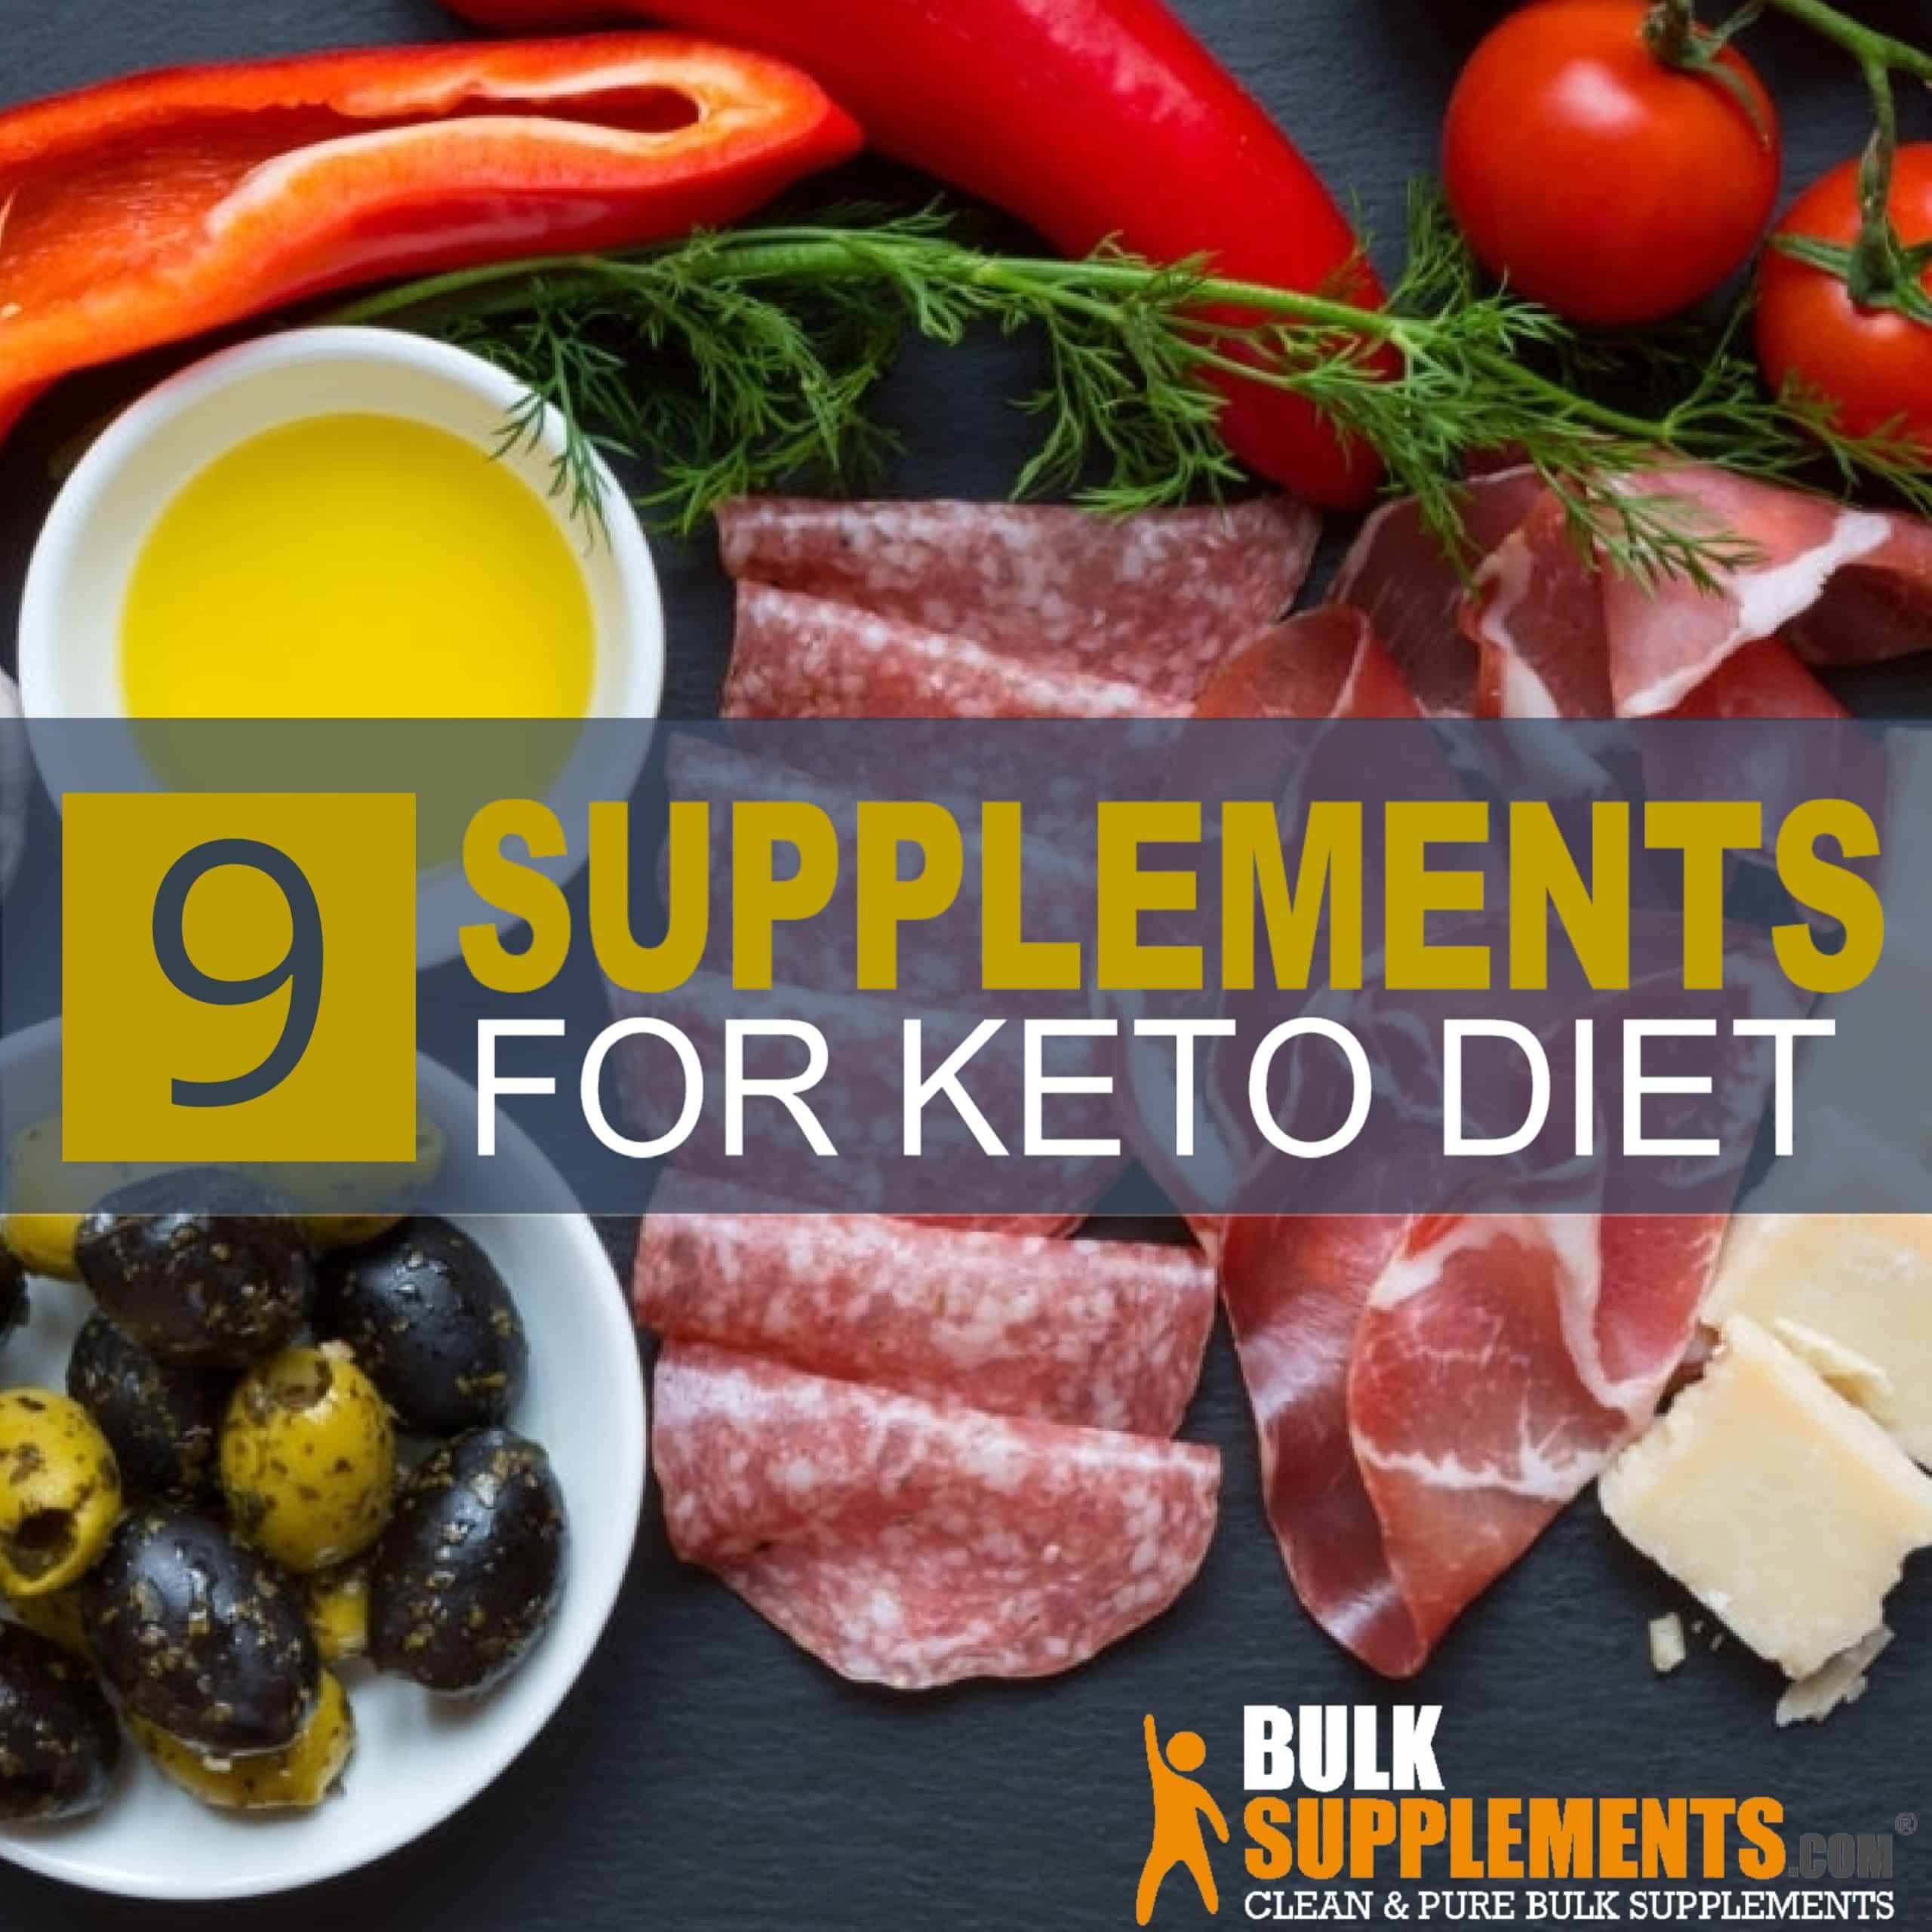 best supplements for keto diet